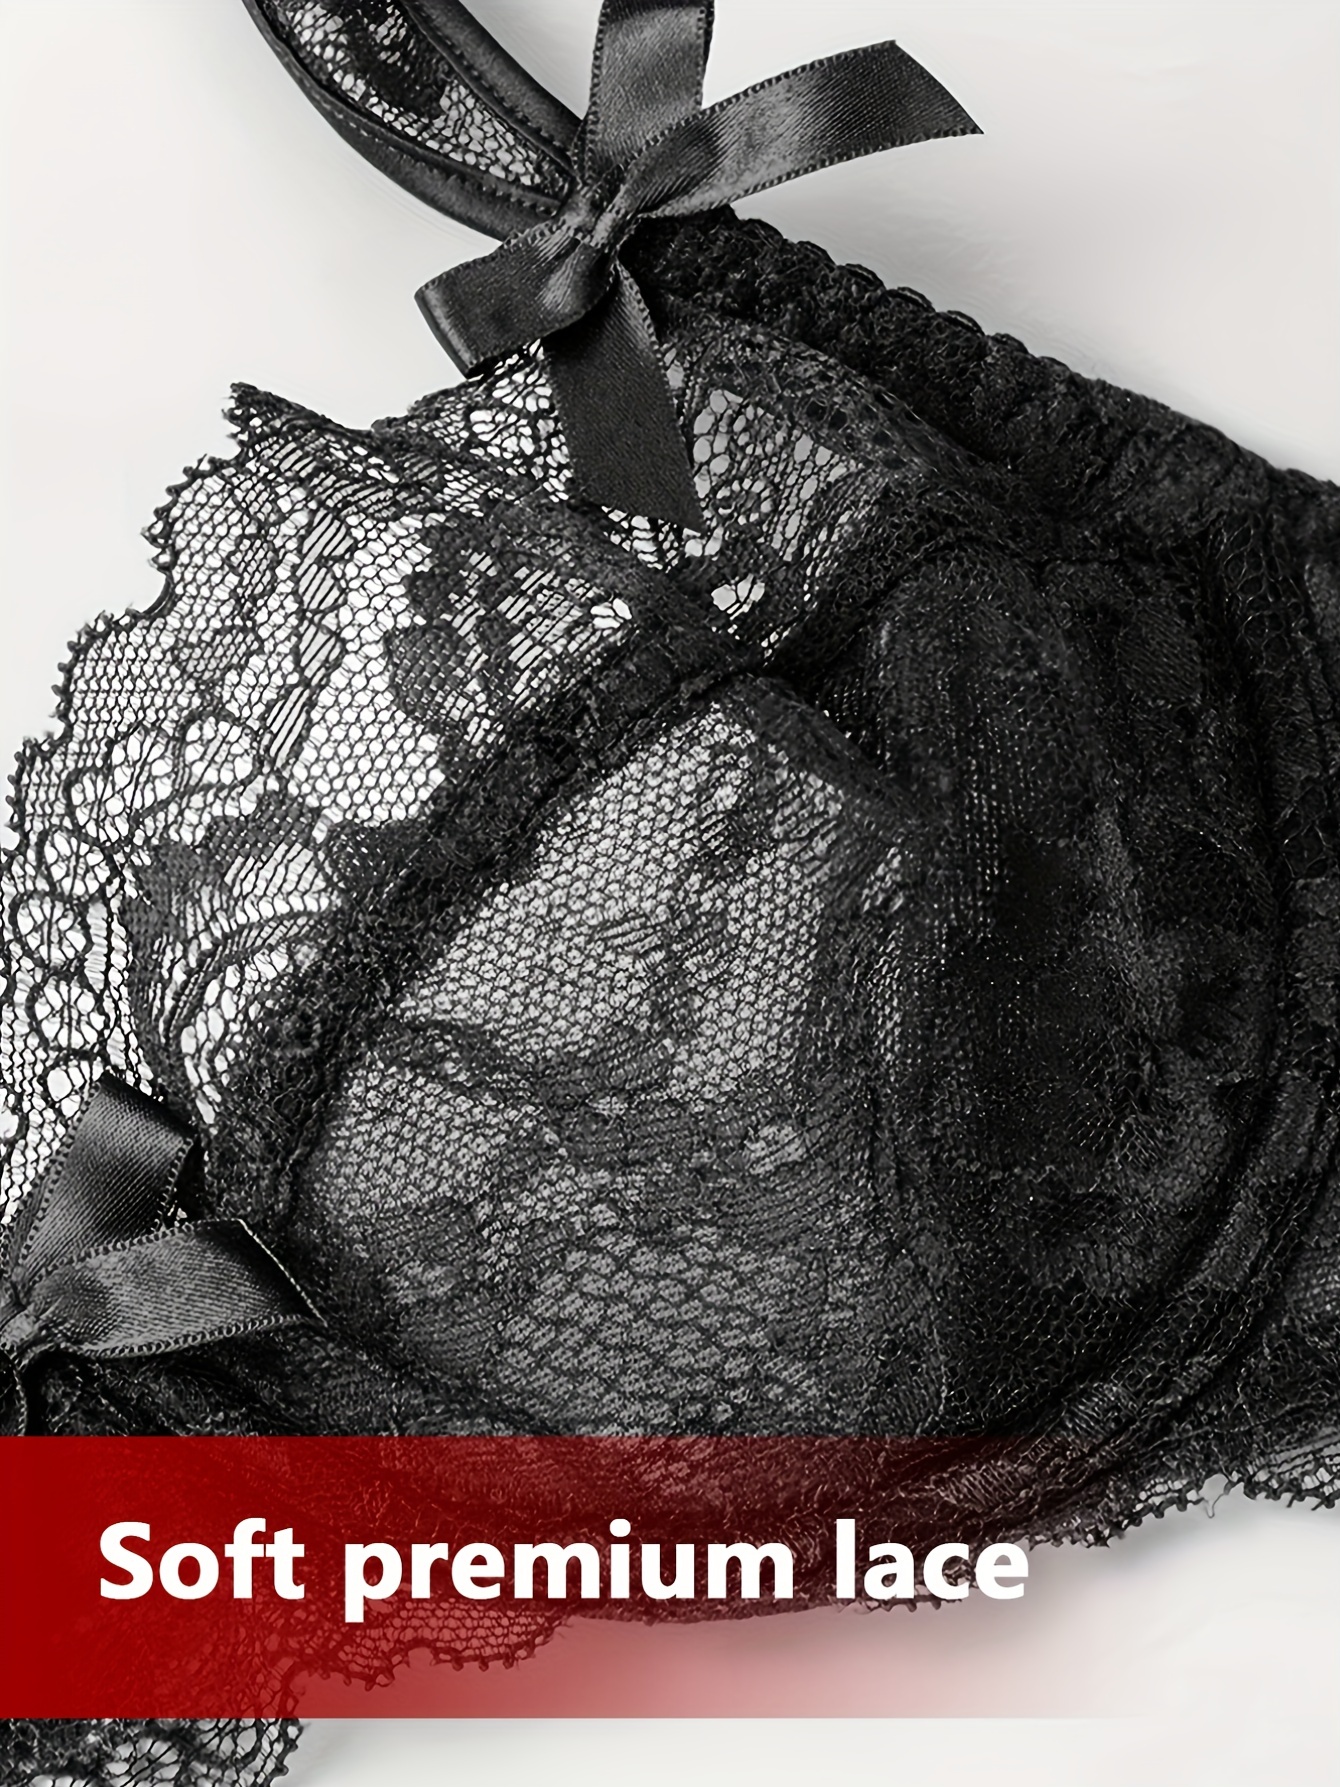 Premium Photo  A model with black lace bra and black lace underwear